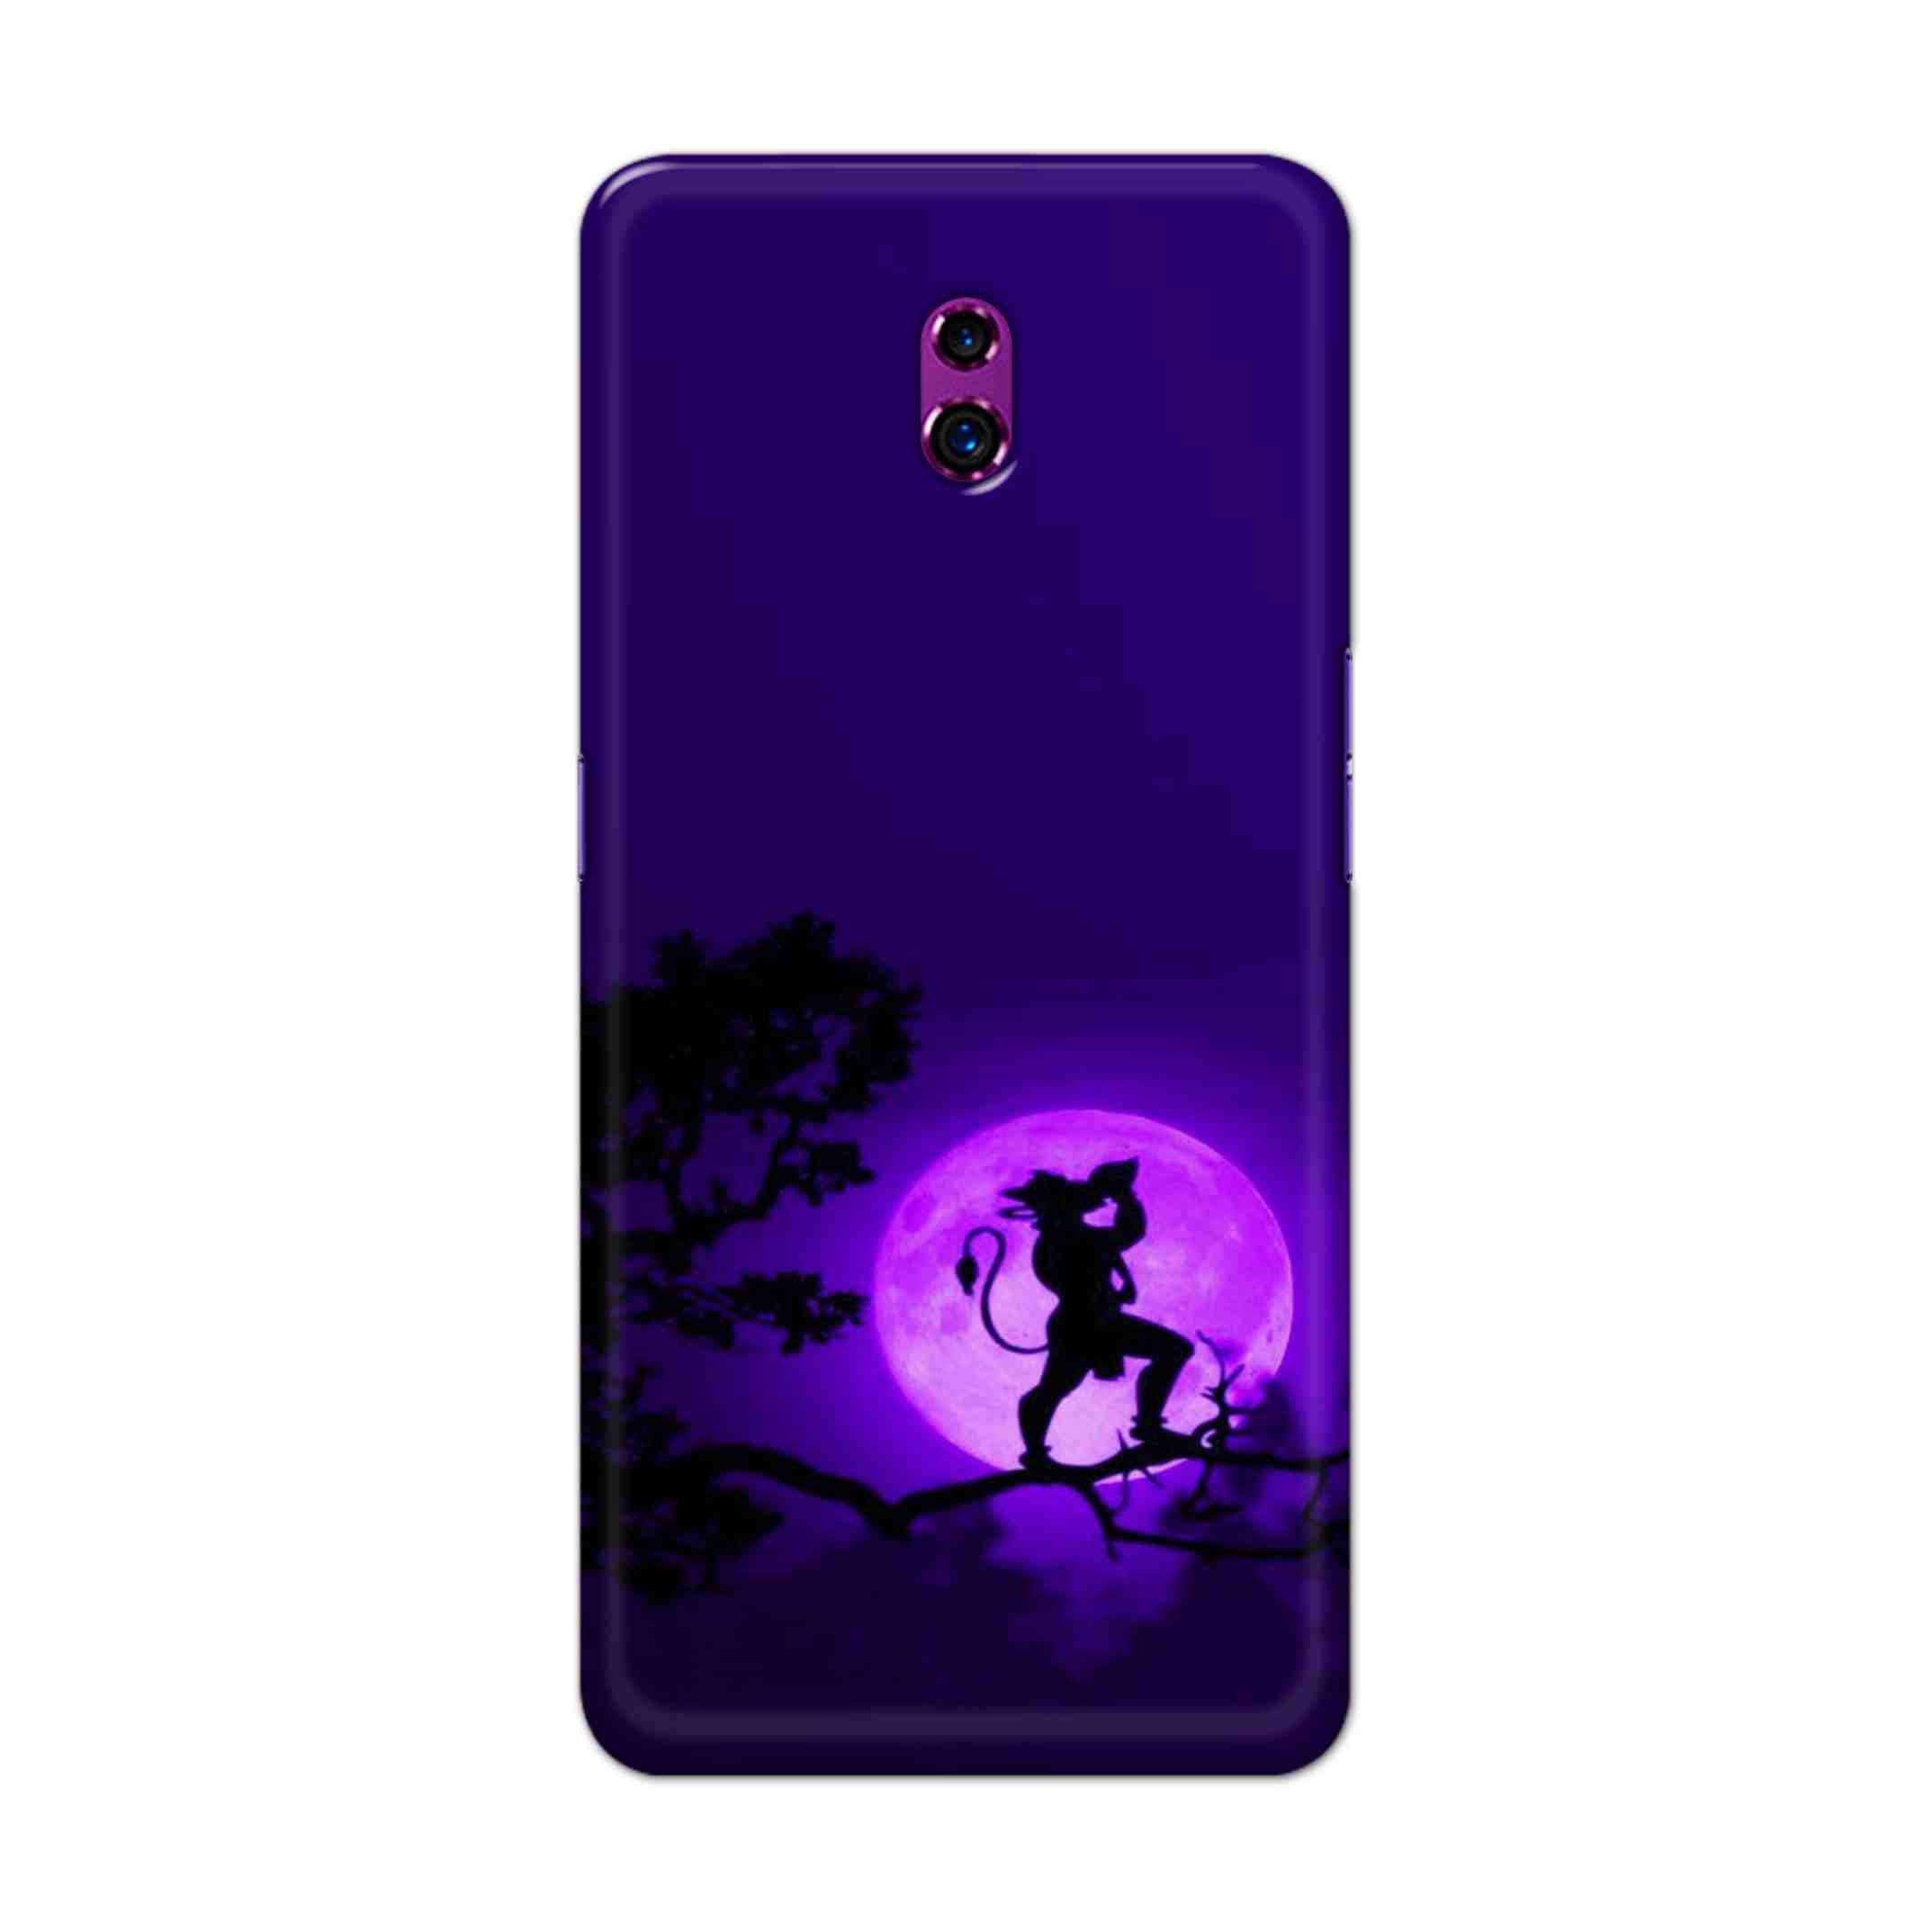 Buy Hanuman Hard Back Mobile Phone Case Cover For Oppo Reno Online